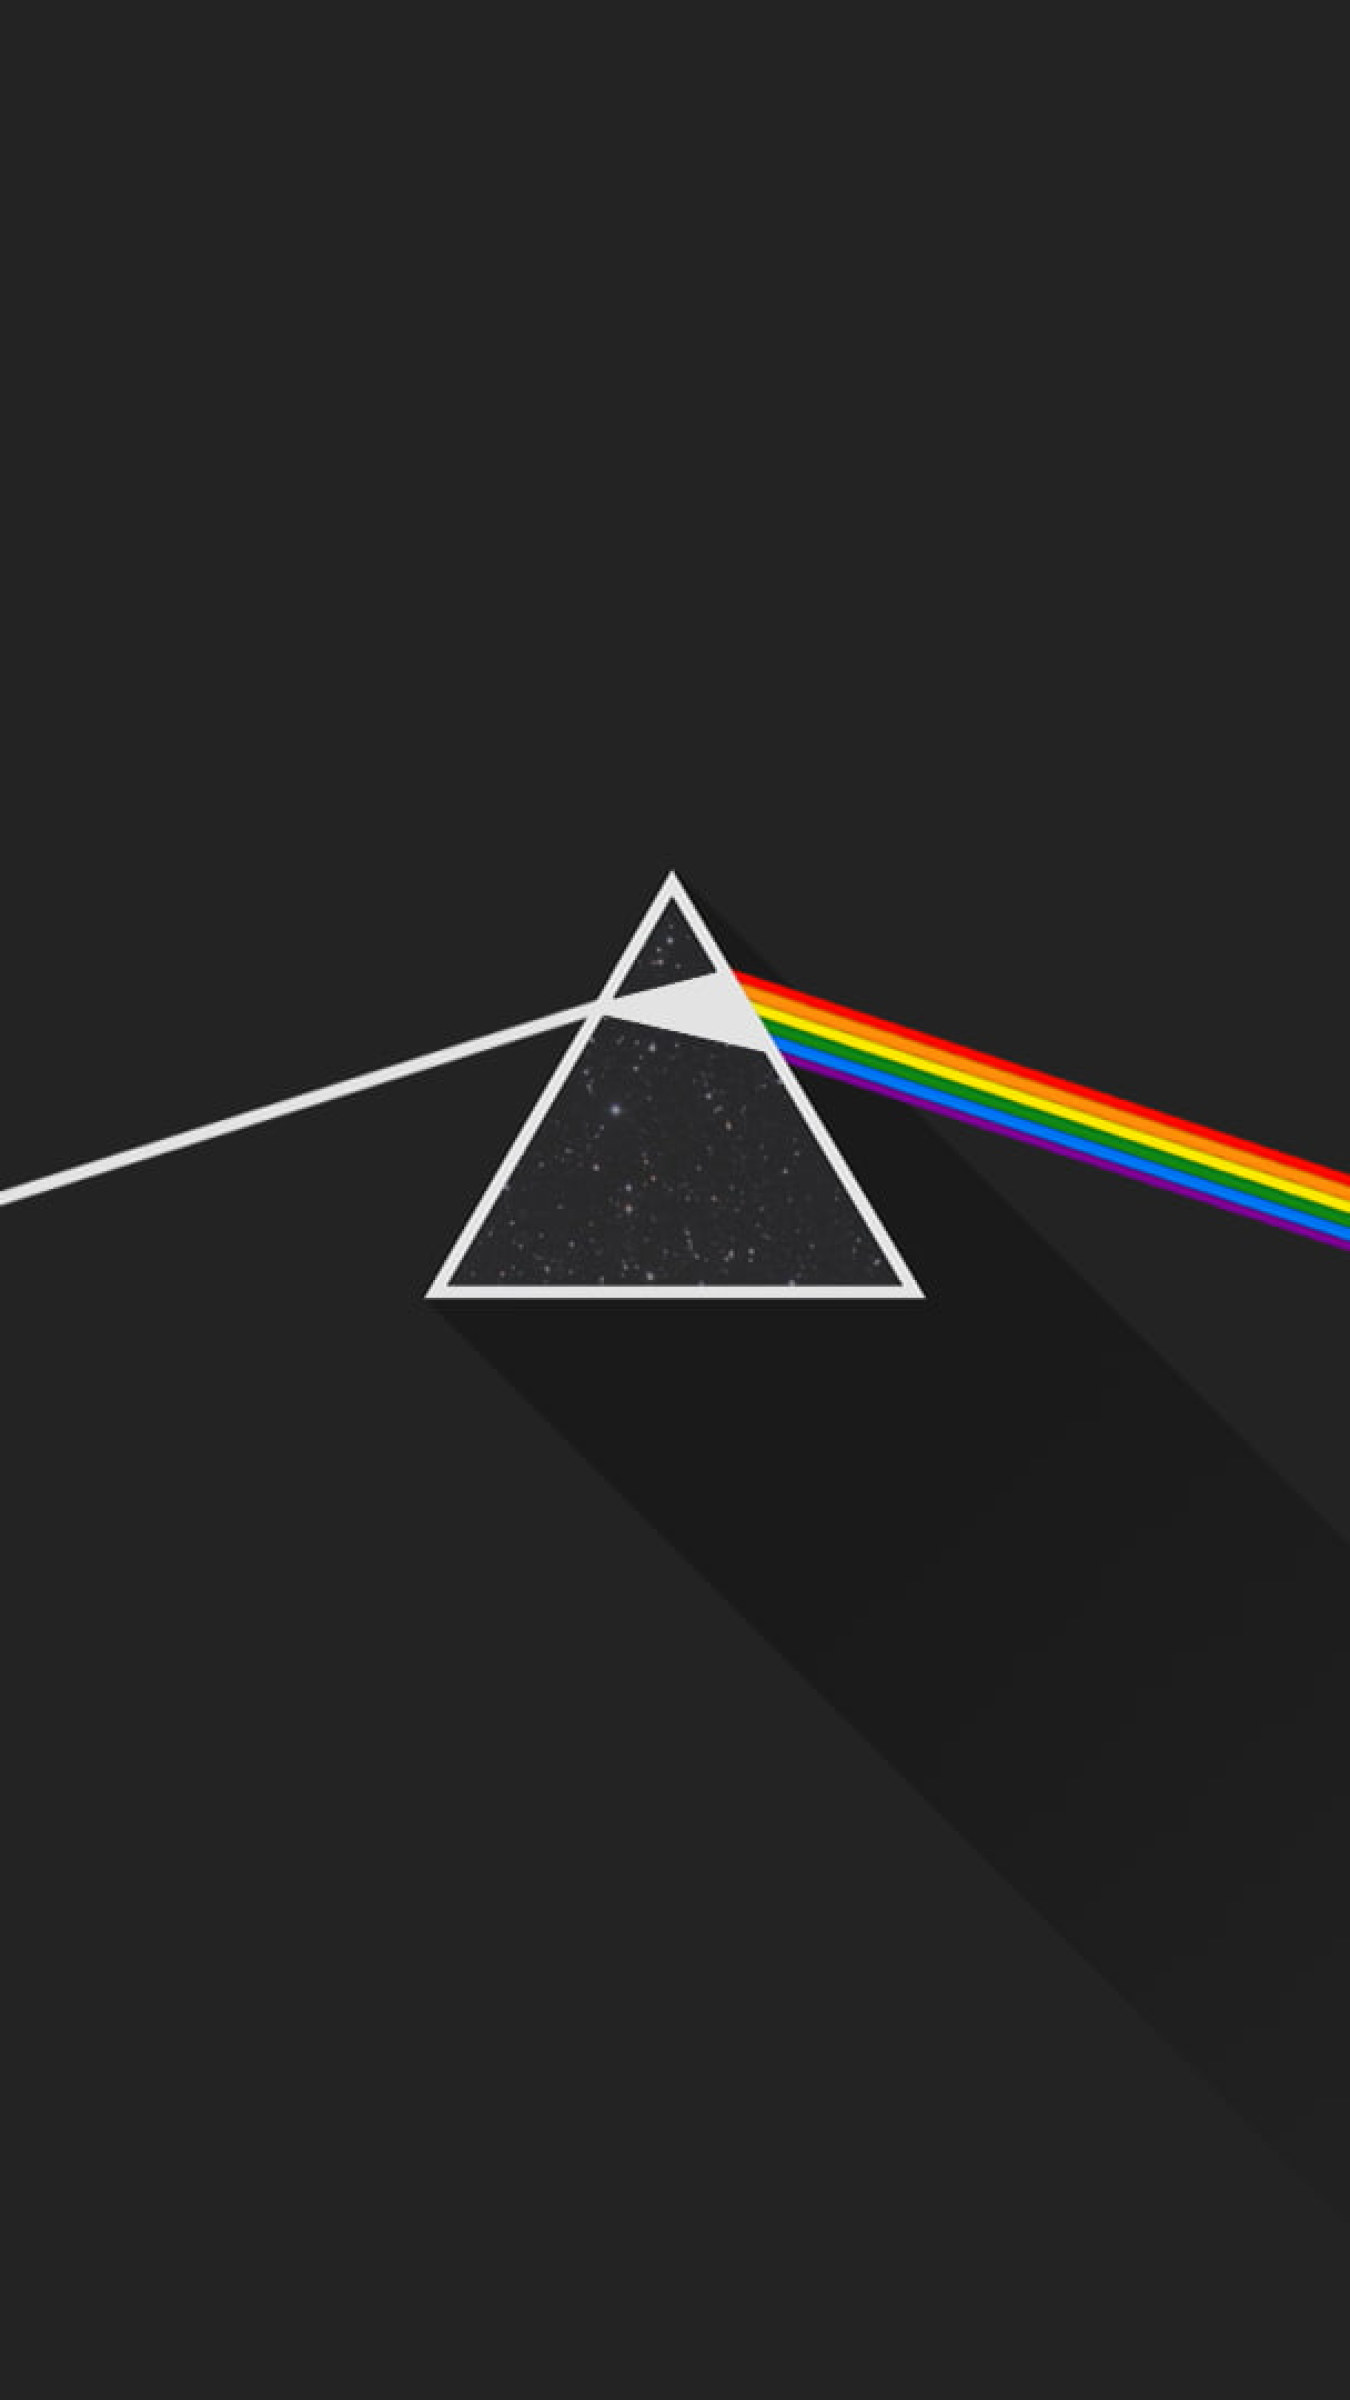 Dark Side Of The Moon Pink Floyd Wallpapers - Wallpaper Cave